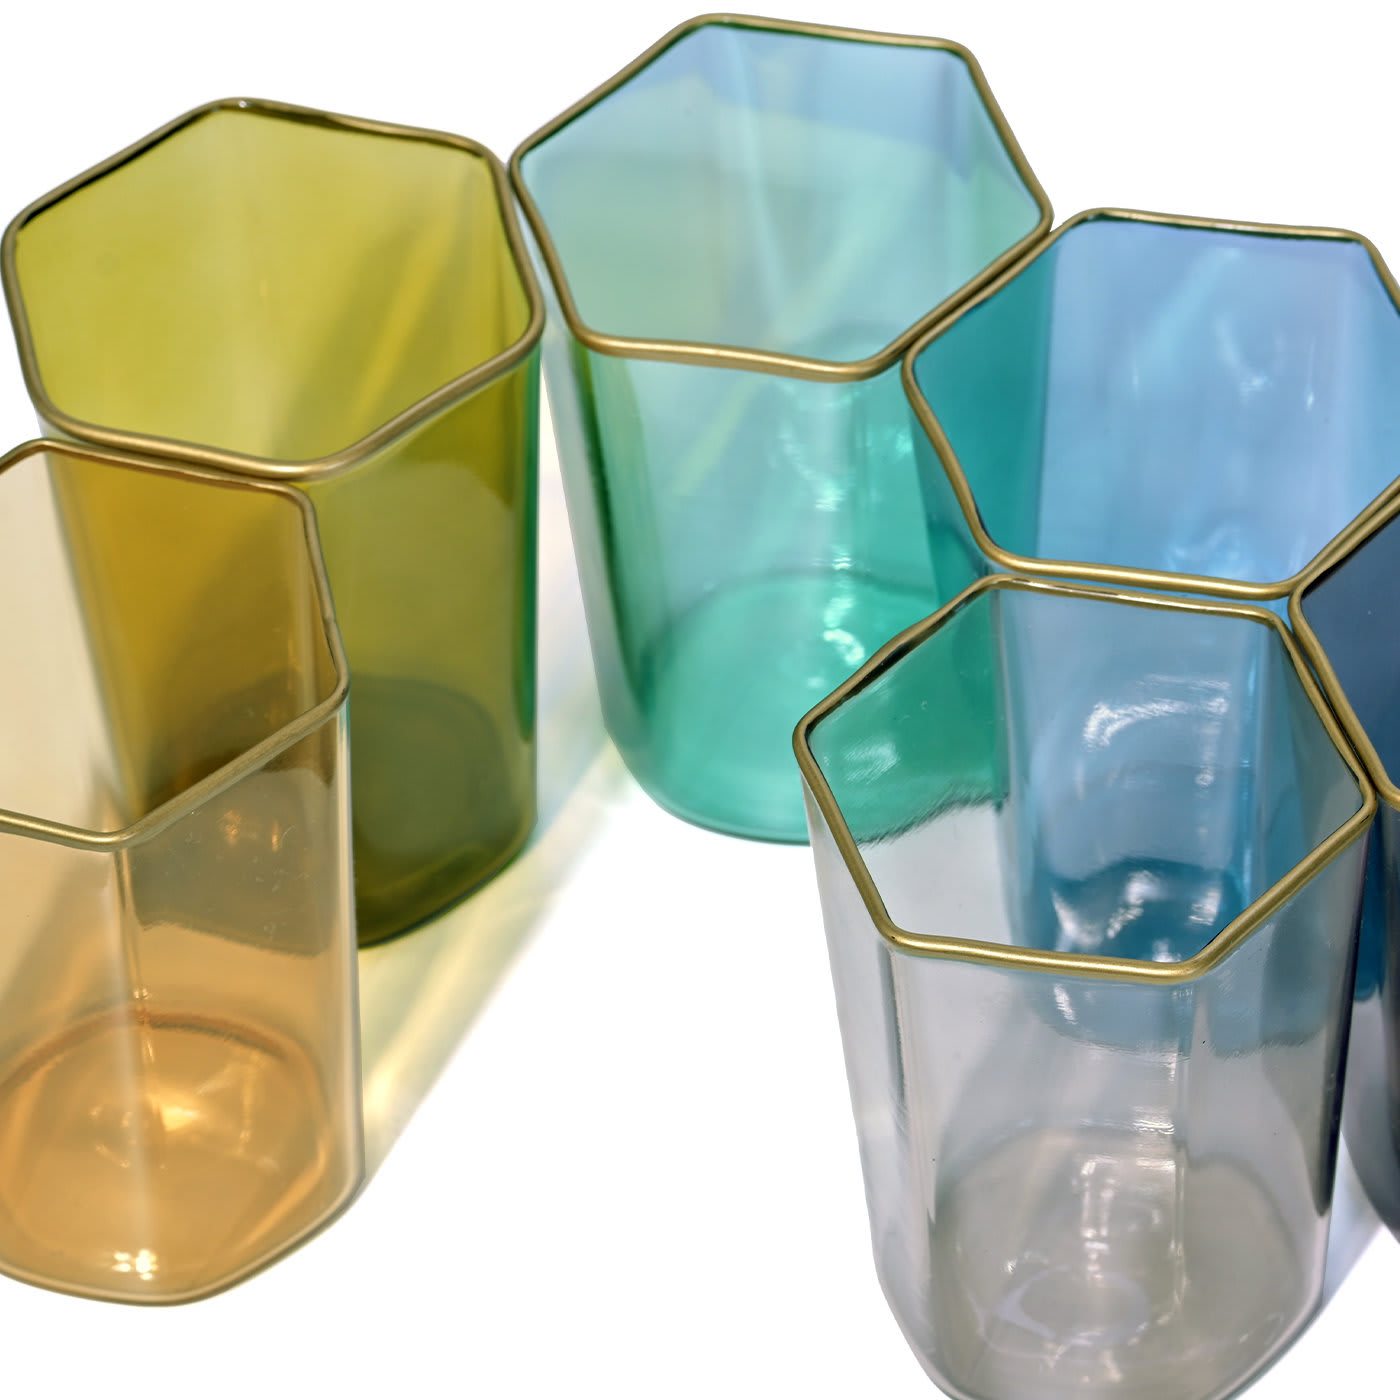 Hexagonal Set of 6 Colorful Glasses - Casarialto